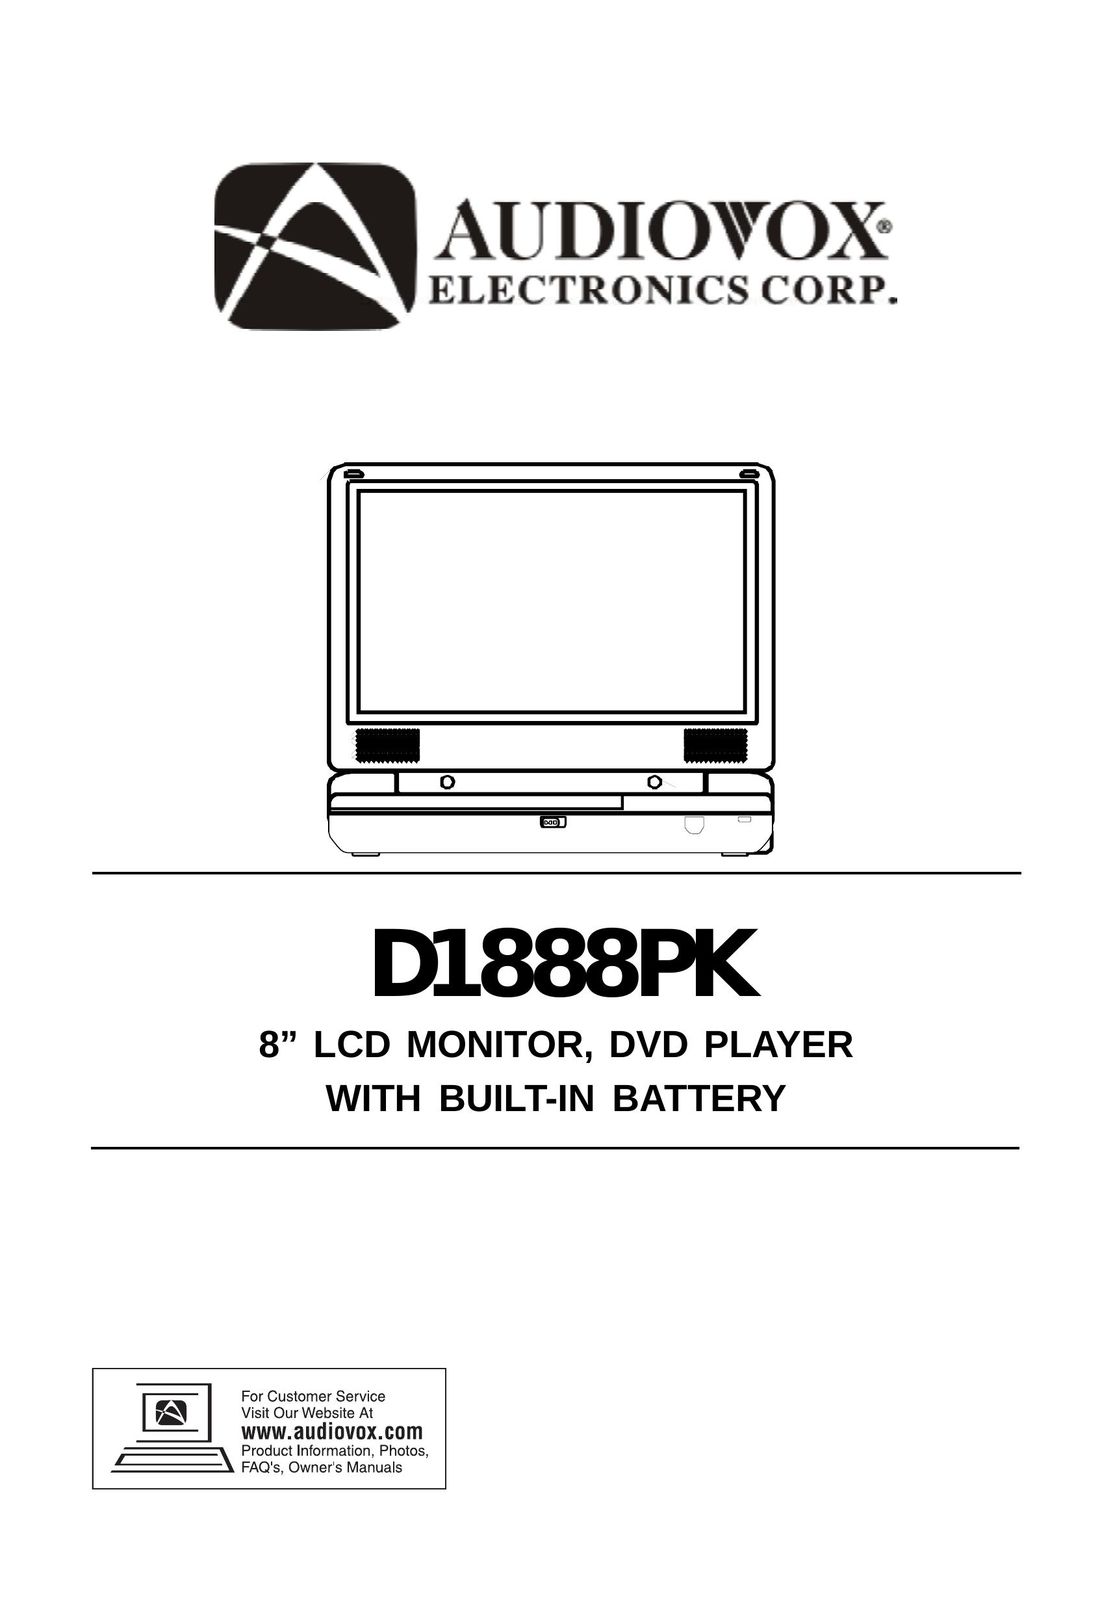 Audiovox D1888PK DVD Player User Manual